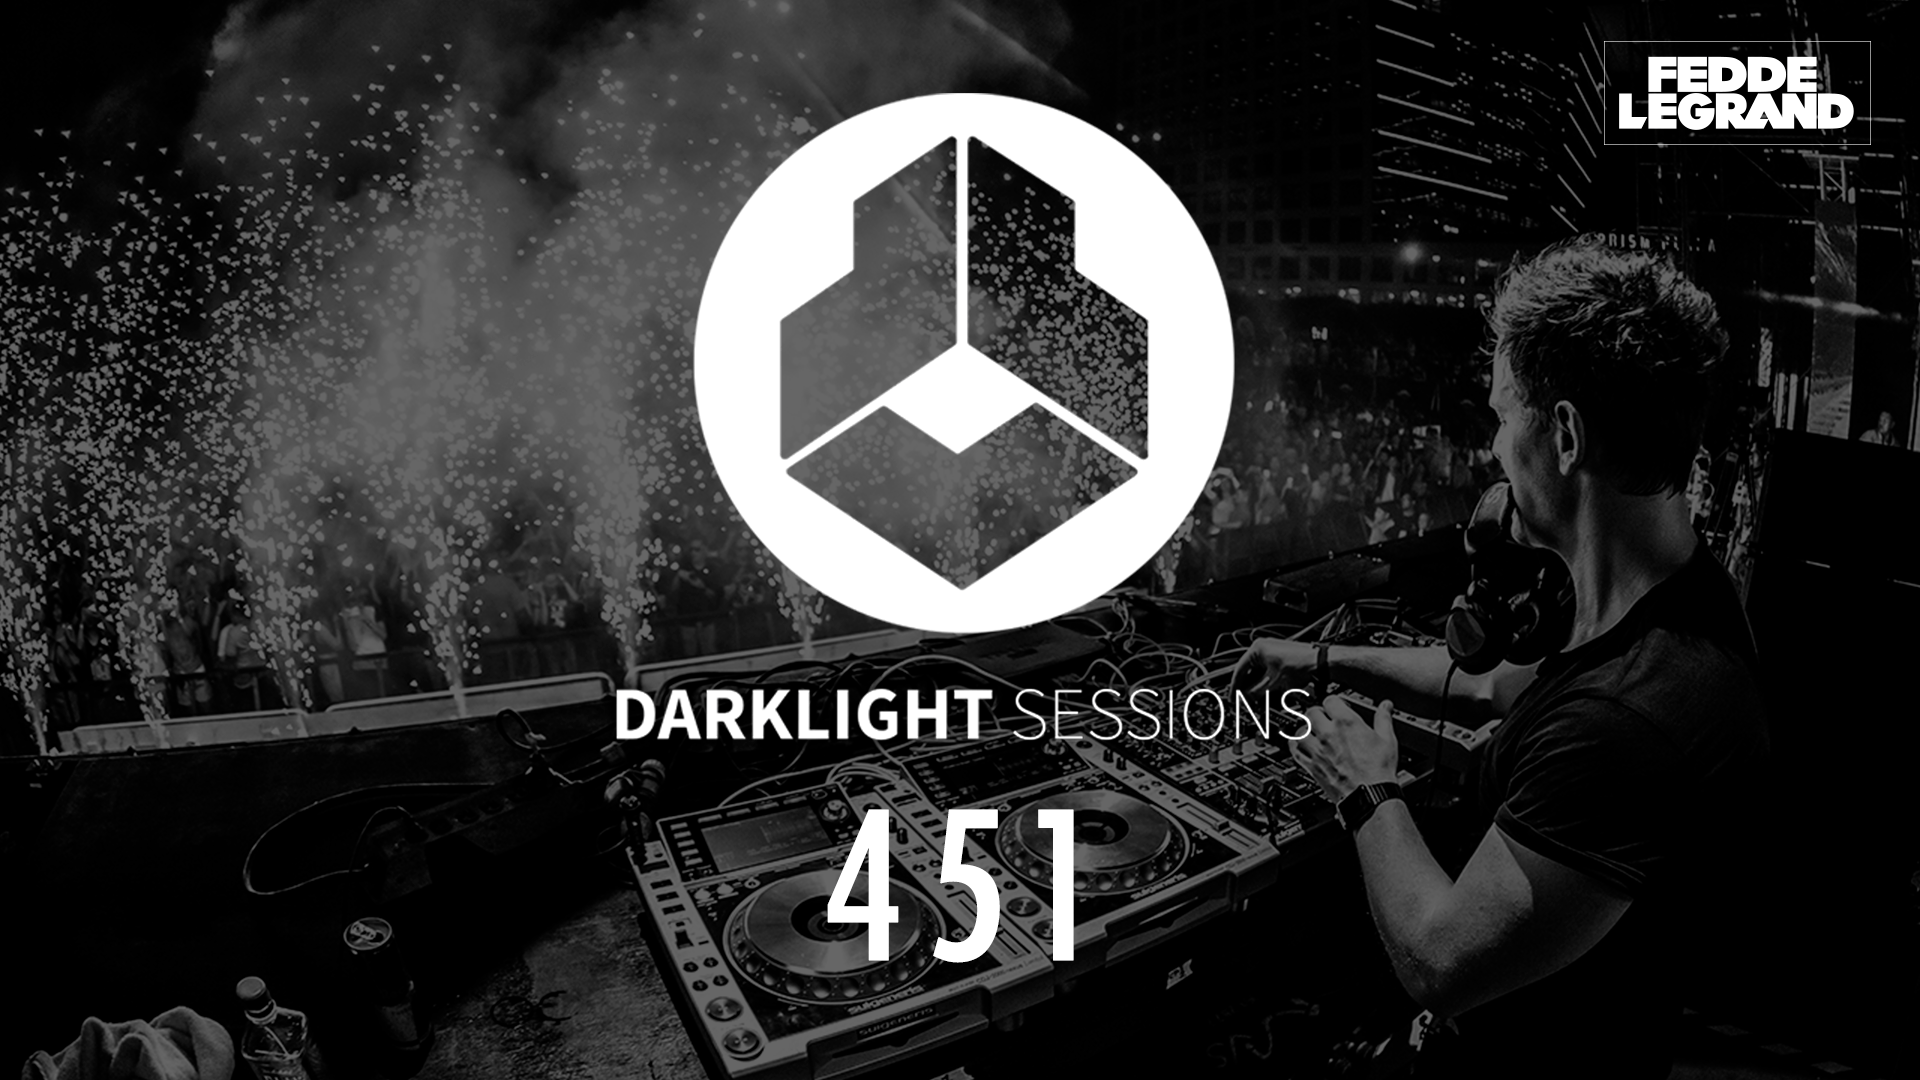 Darklight Sessions 451